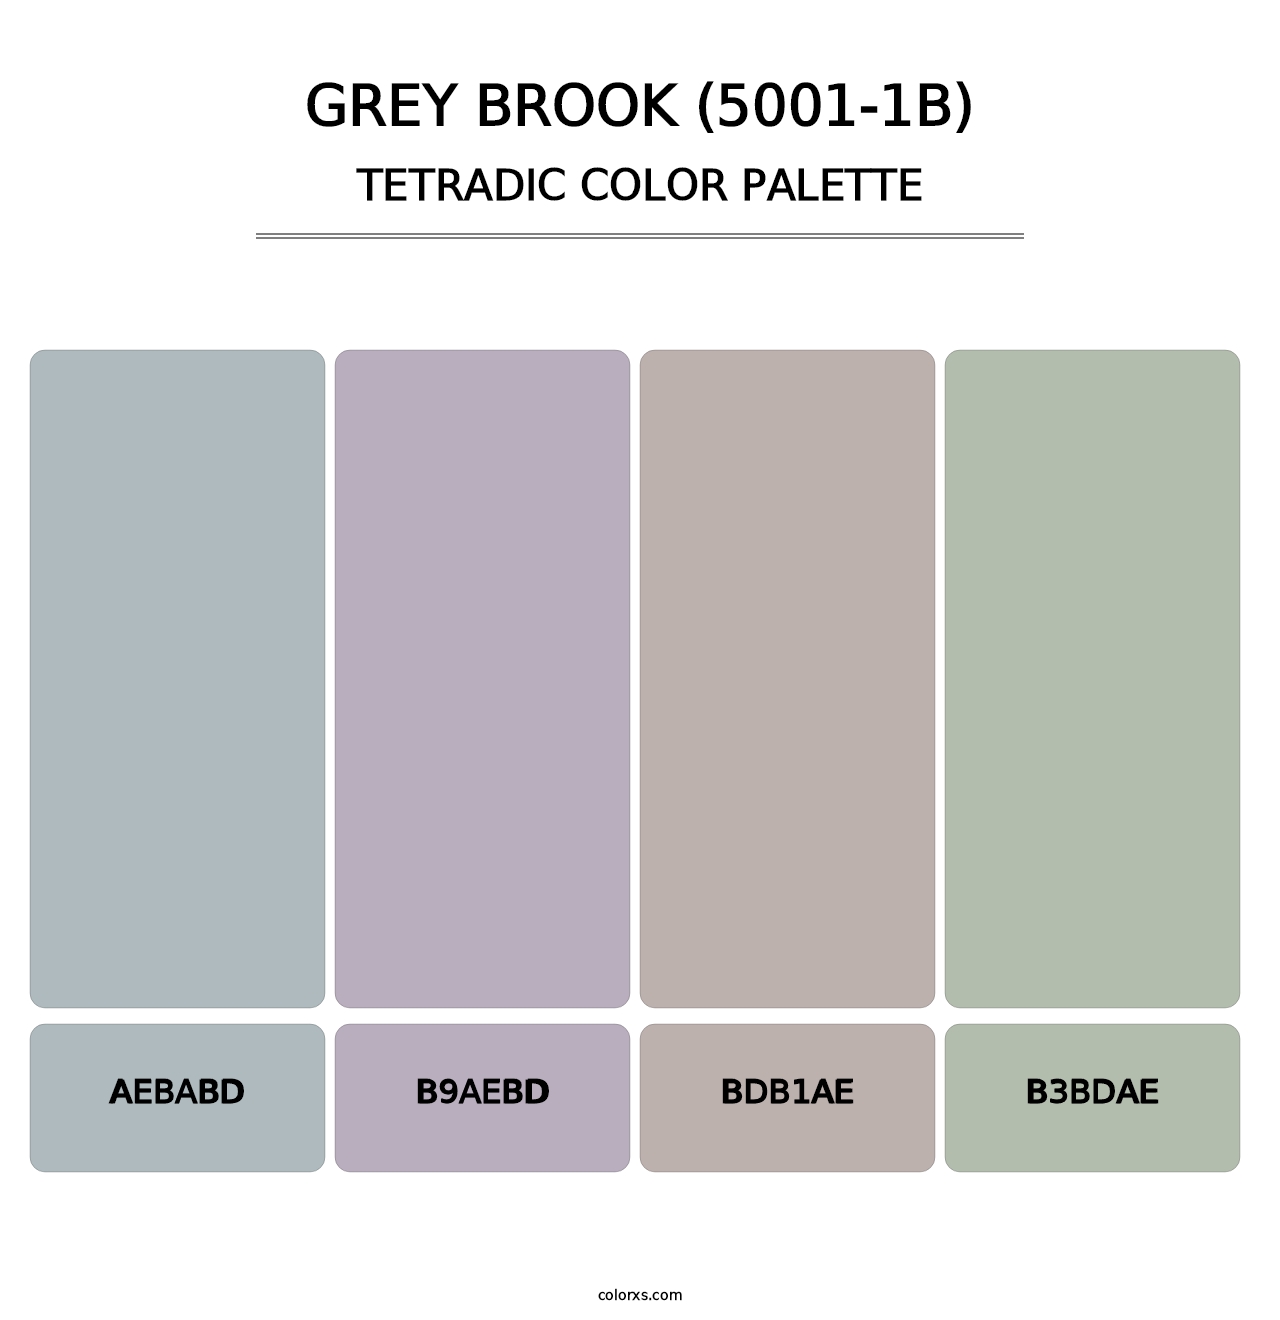 Grey Brook (5001-1B) - Tetradic Color Palette